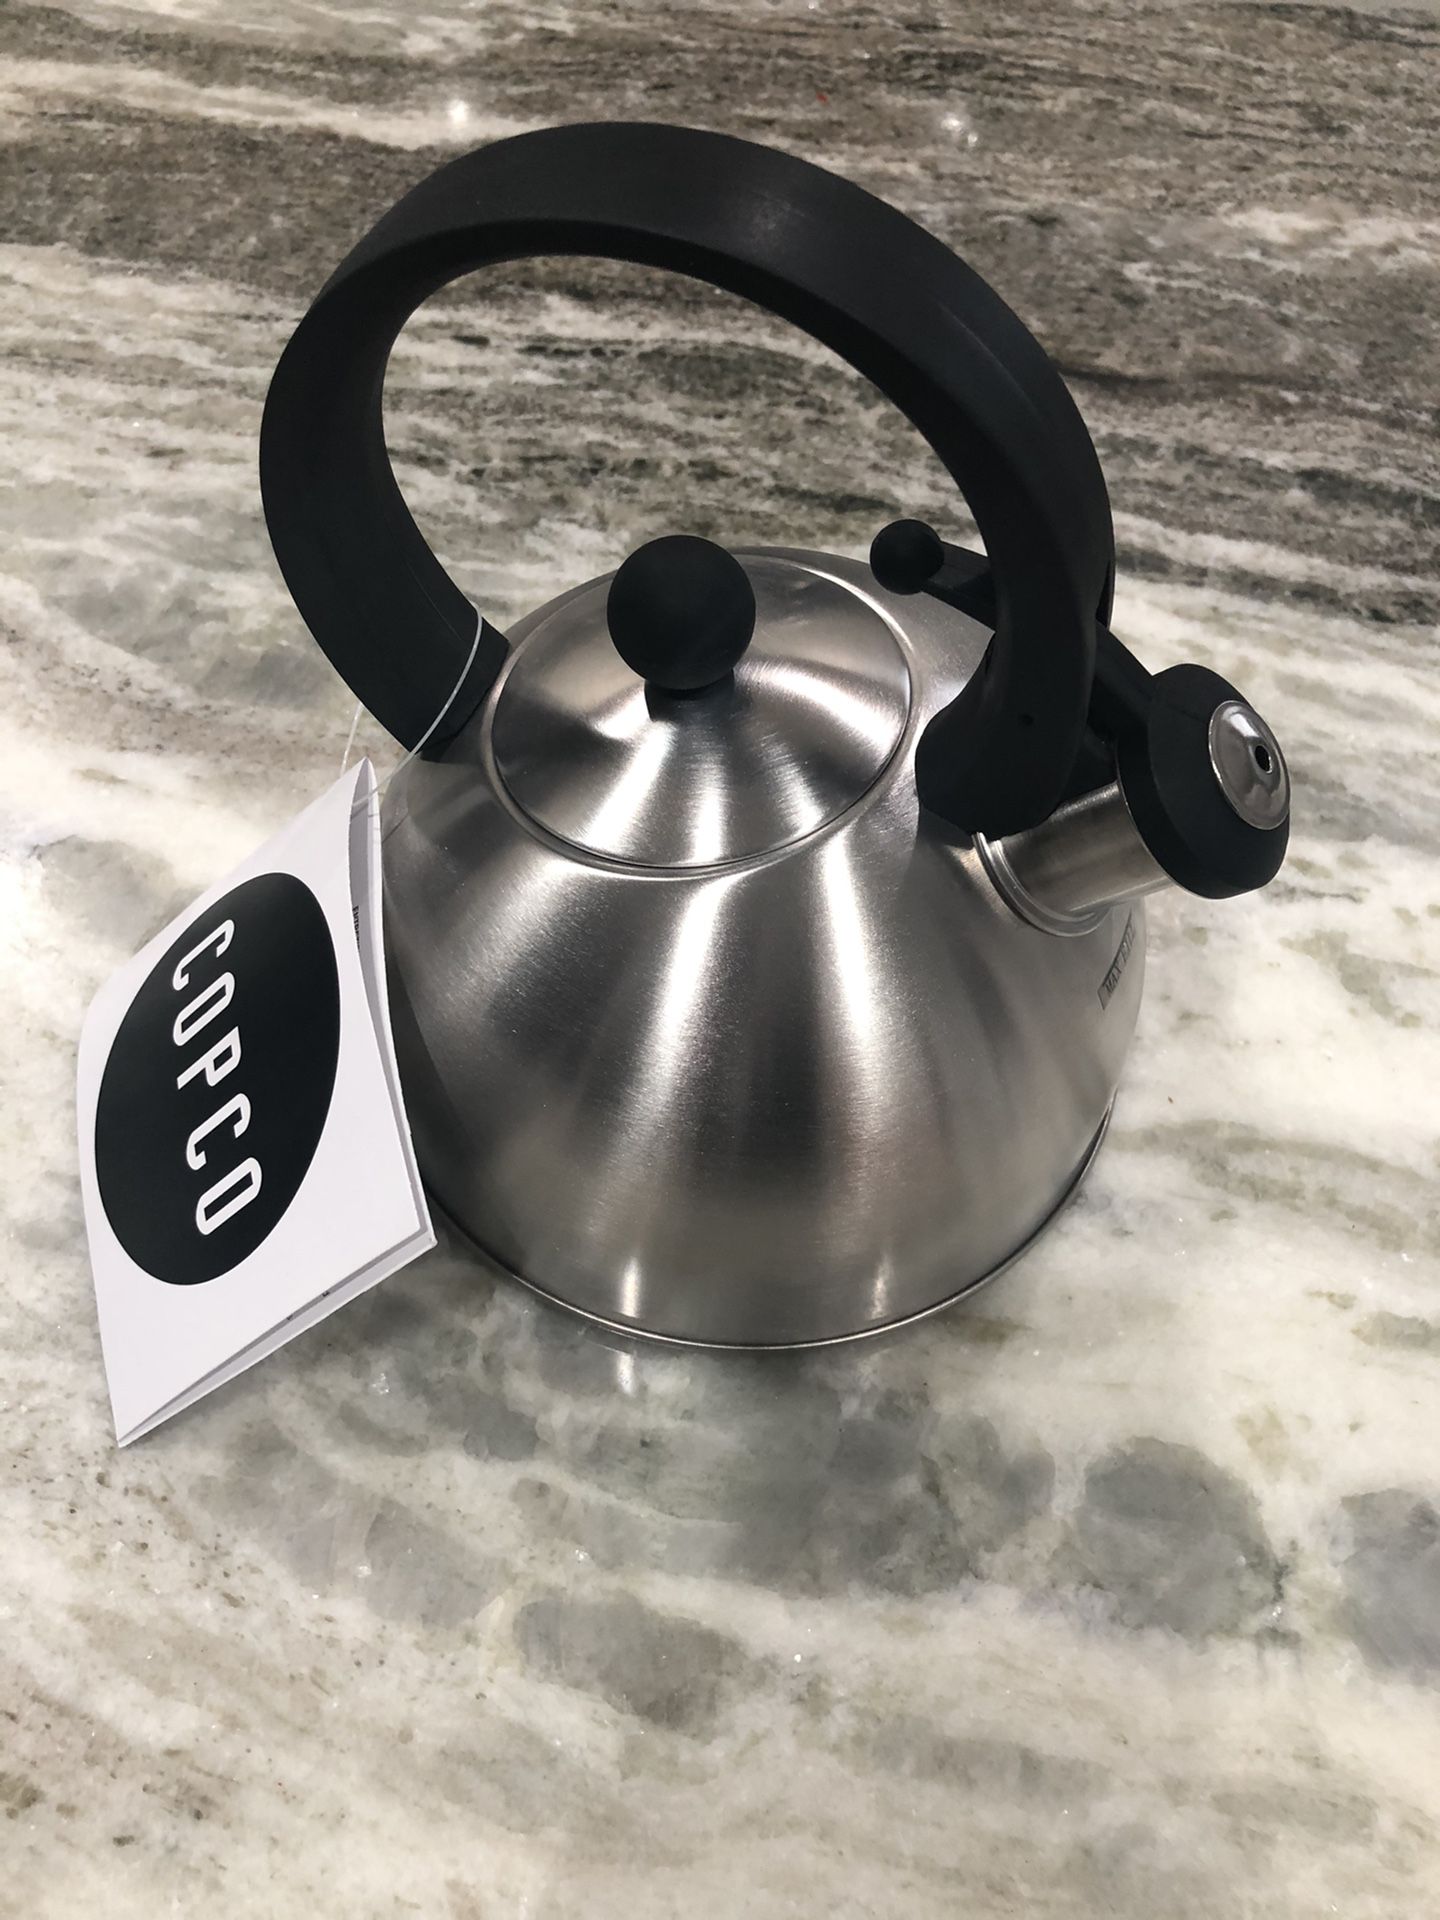 Stainless steel Tea kettle.